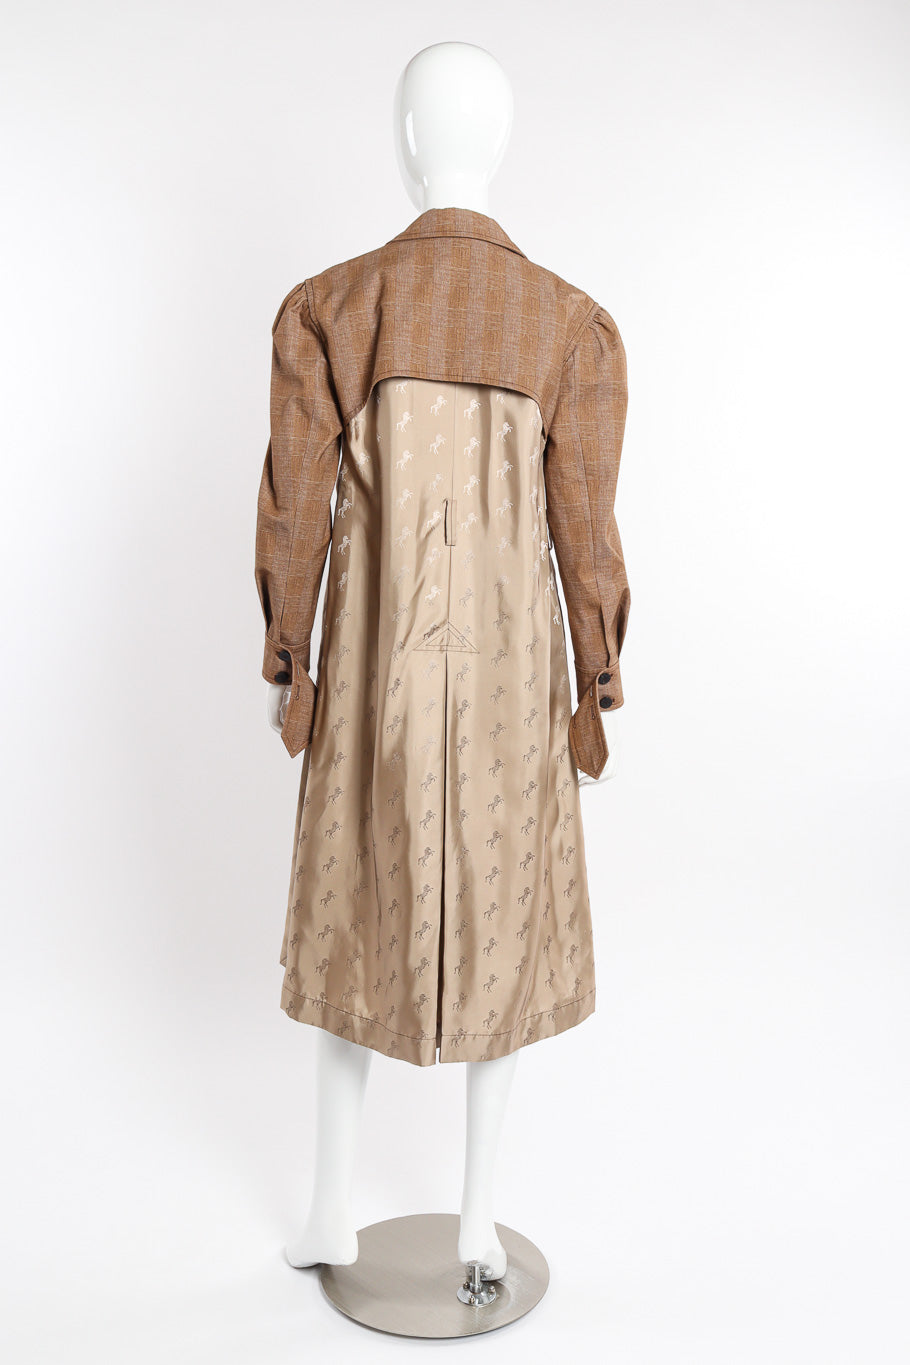 Chloé Equin Print Plaid Trench Coat back view on mannequin @recessla